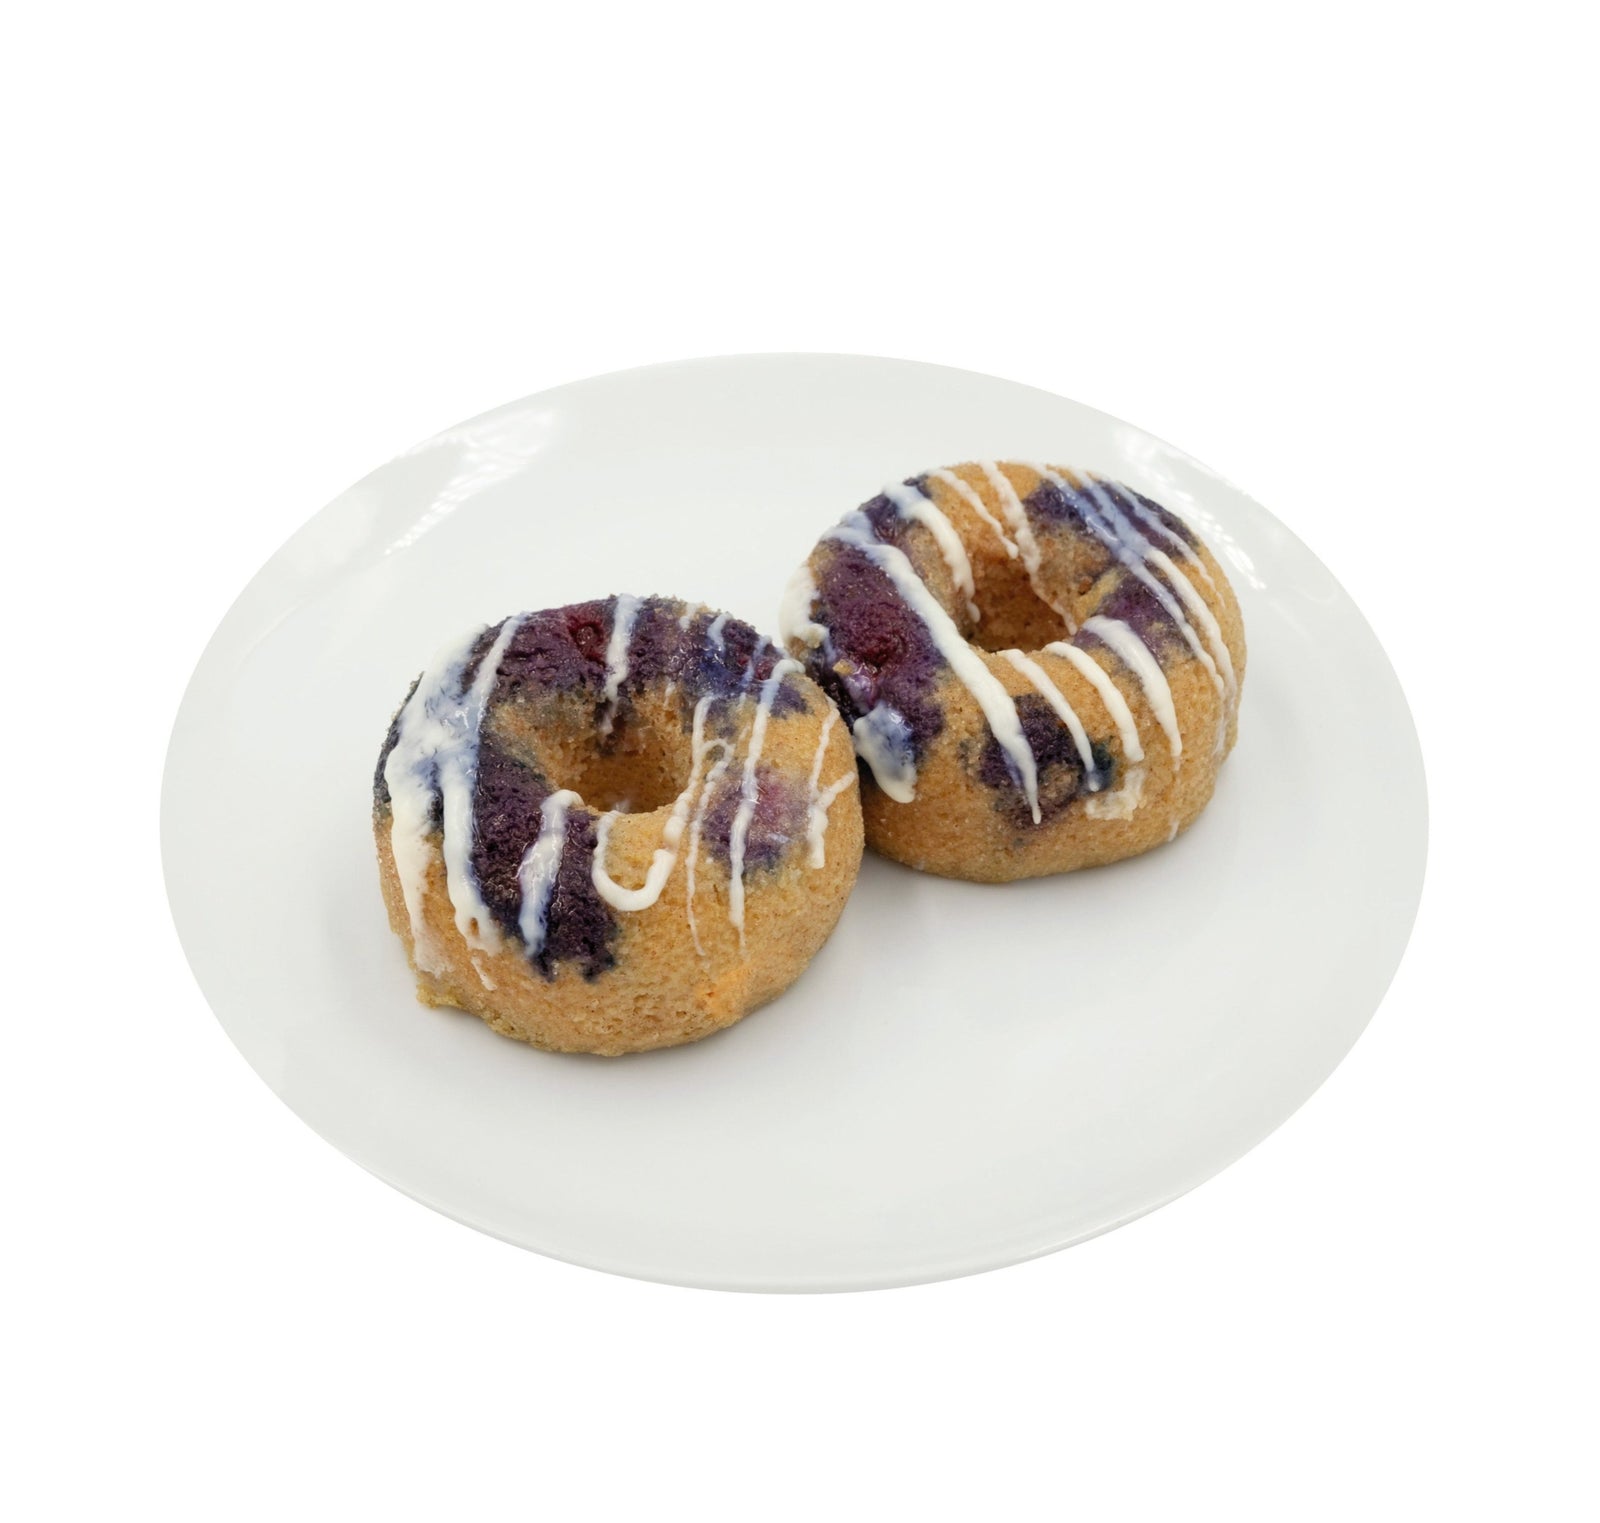 Blueberry Cinnamon Protein Pancakes – Green Lean Clean